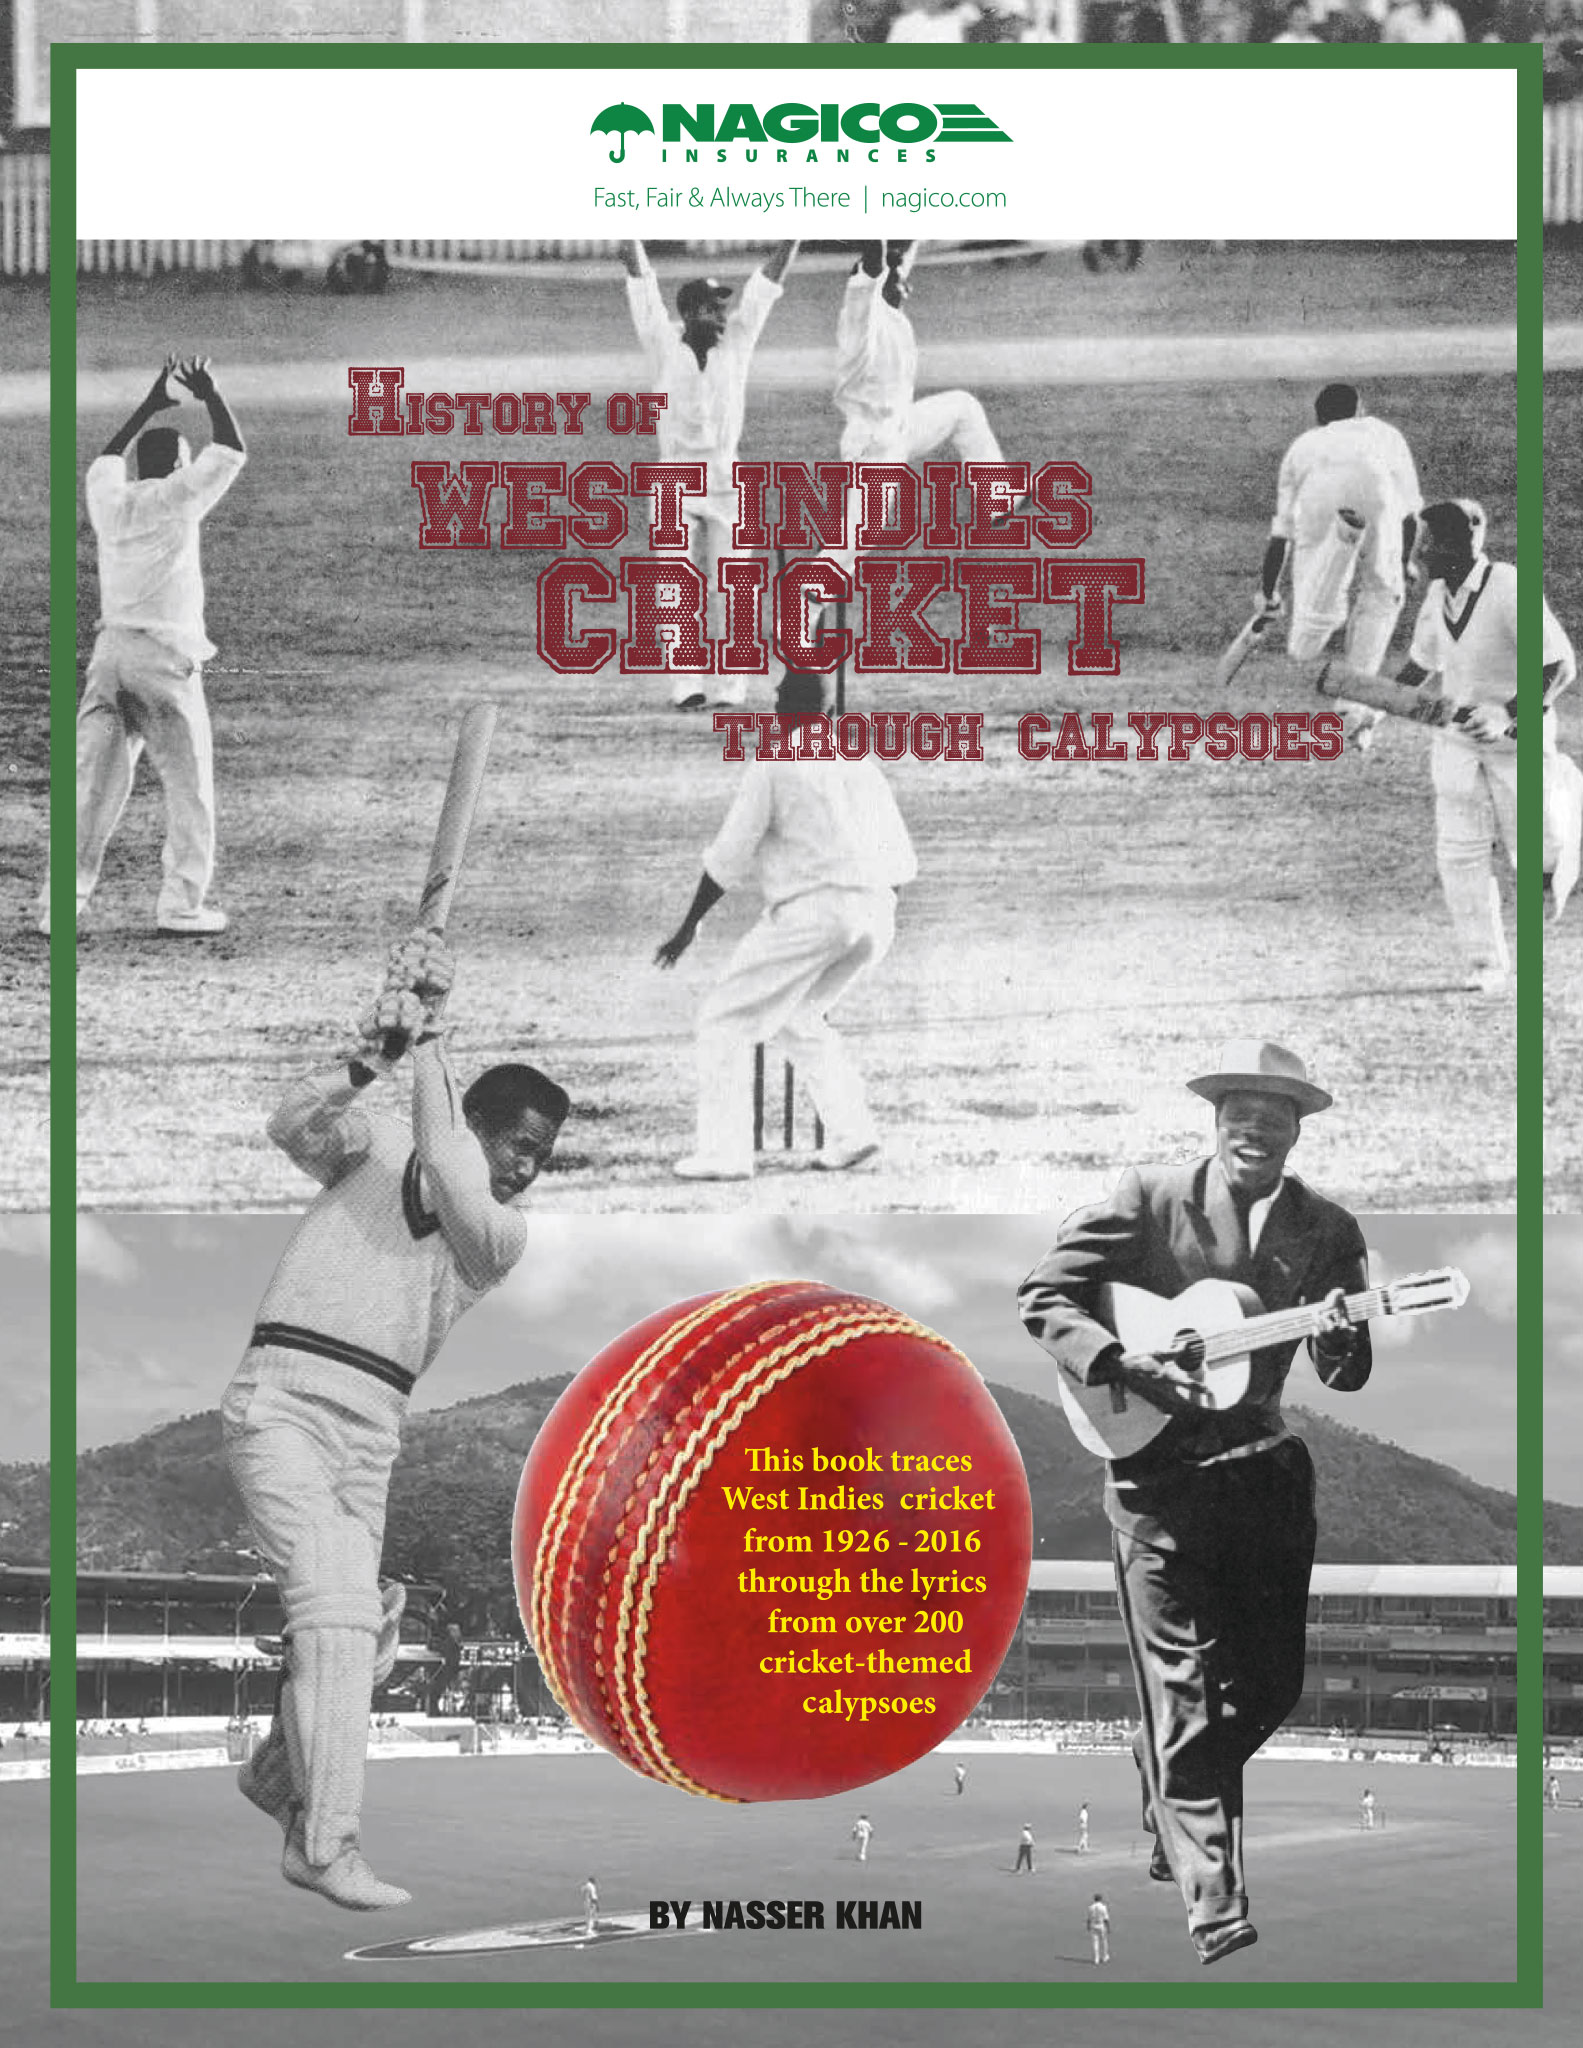 History of West Indies Cricket through Calypsos - Nasser Khan